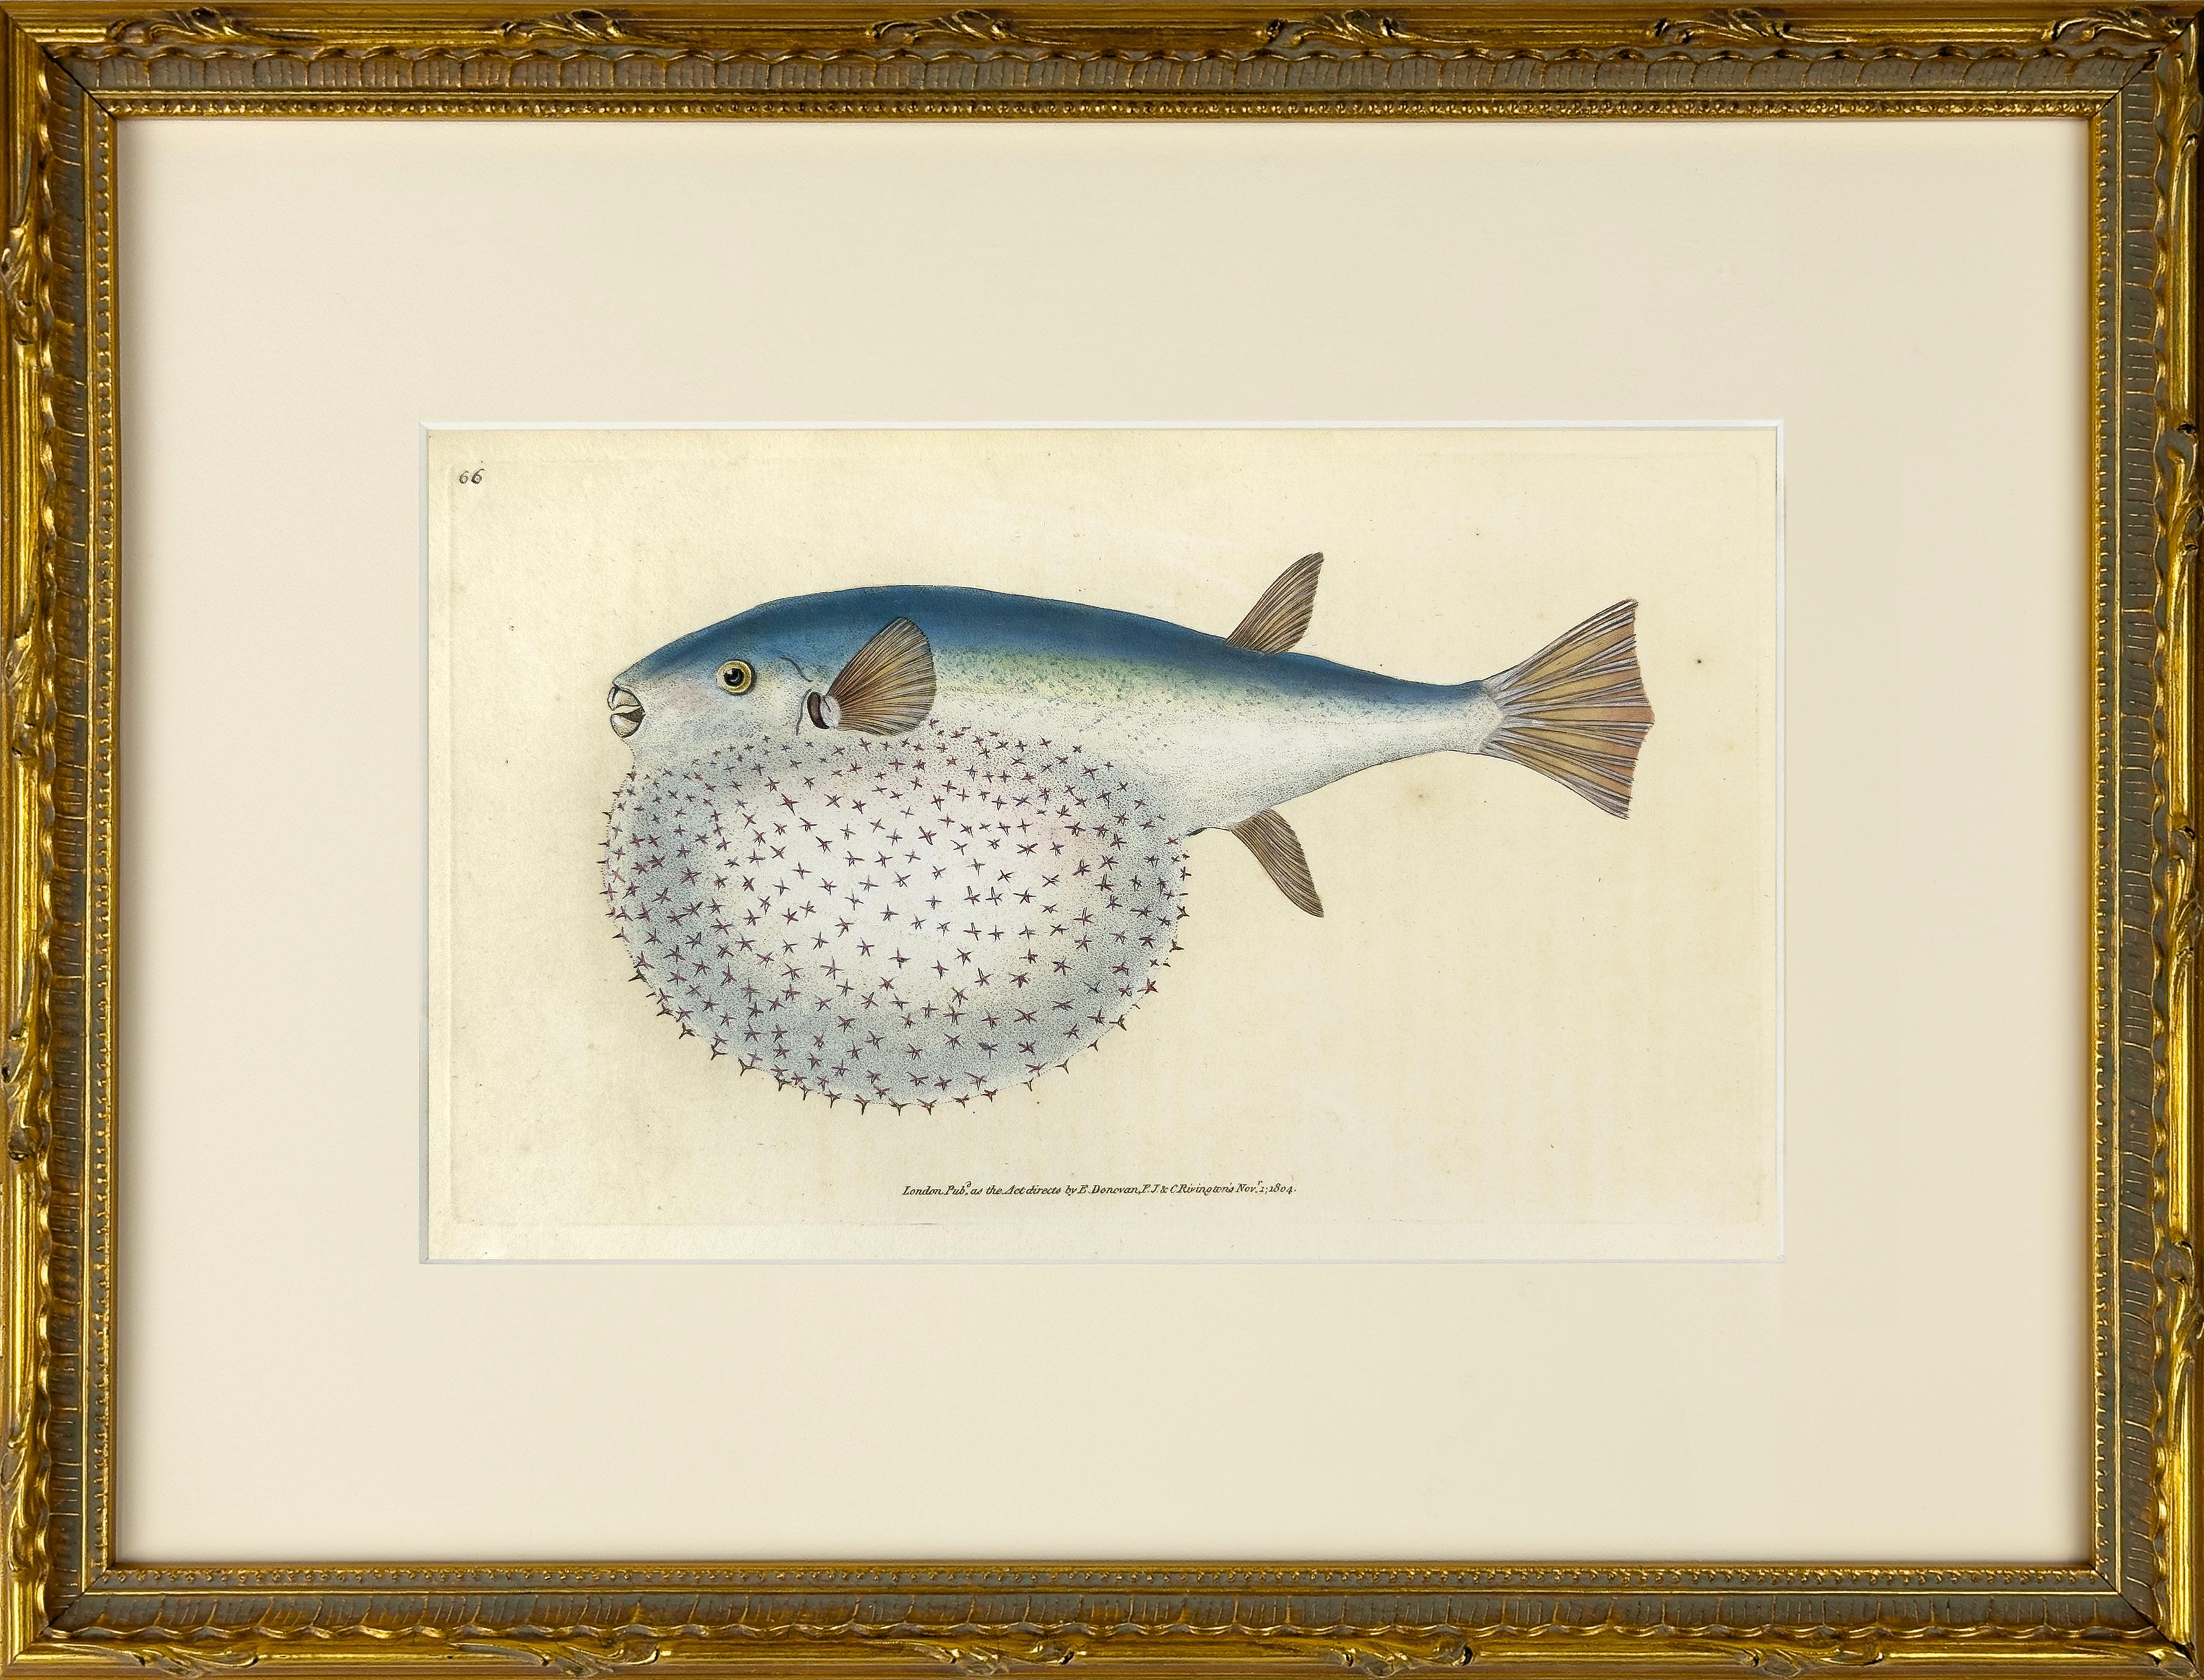 66: Tetrodon stellatus, Stellated Globe-Fish - Print by Edward Donovan